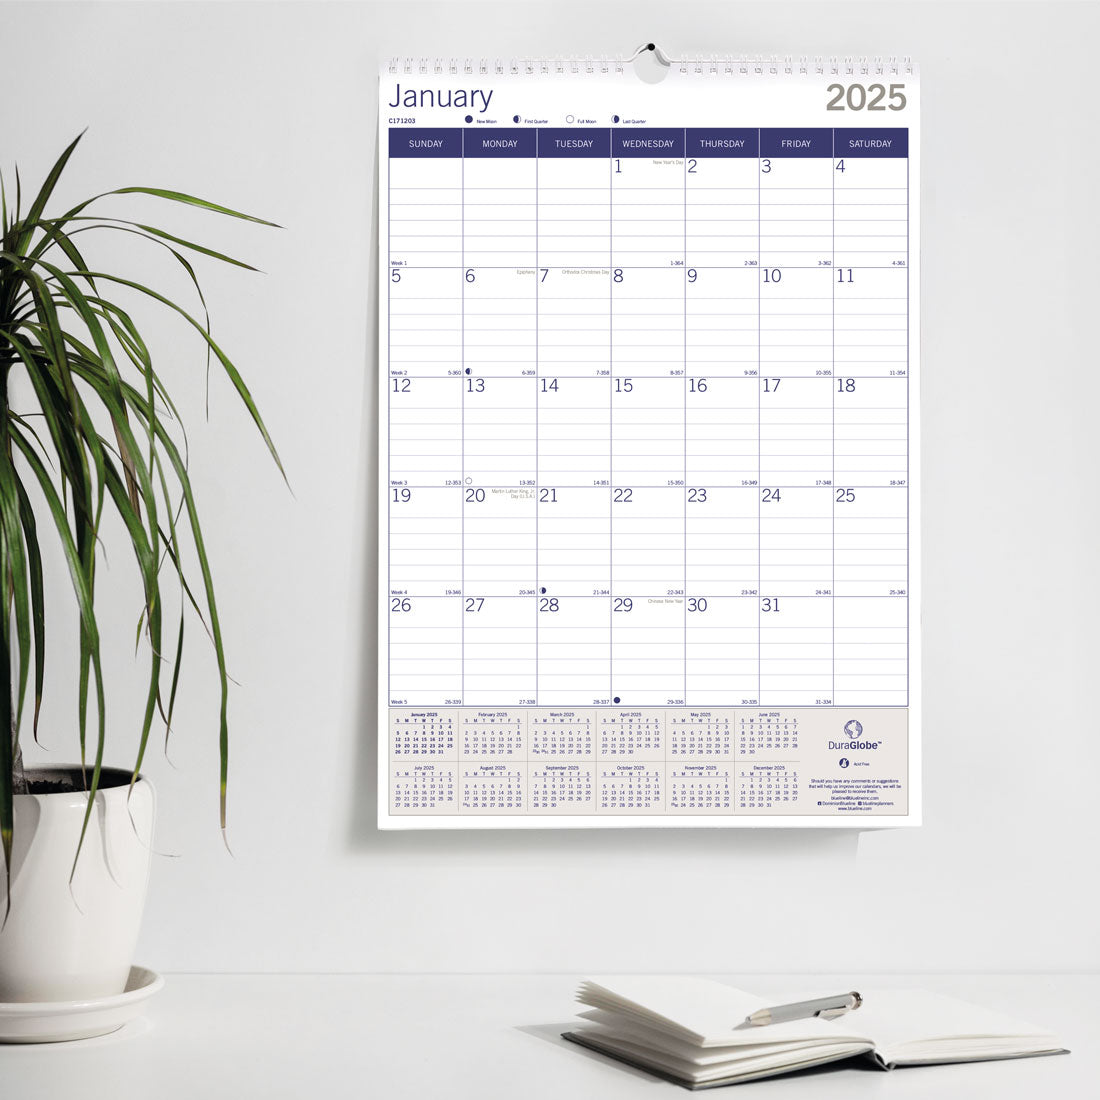 DuraGlobe Monthly Wall Calendar 2025 (C171203-25)